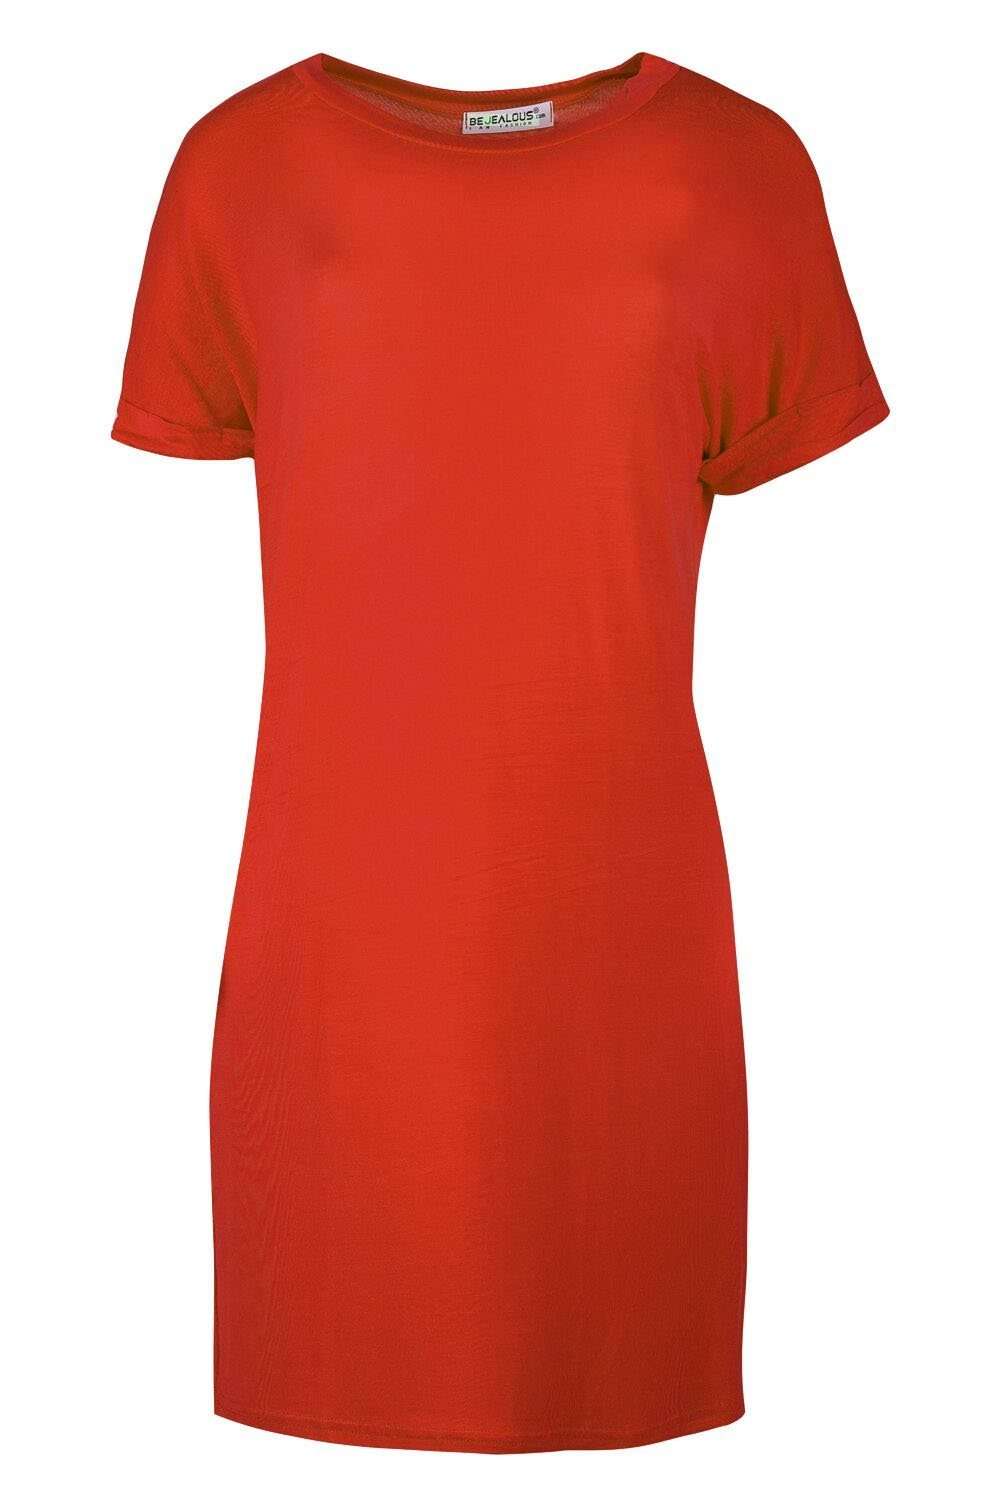 Beige Roll Sleeve Oversized Basic Tshirt Dress - bejealous-com